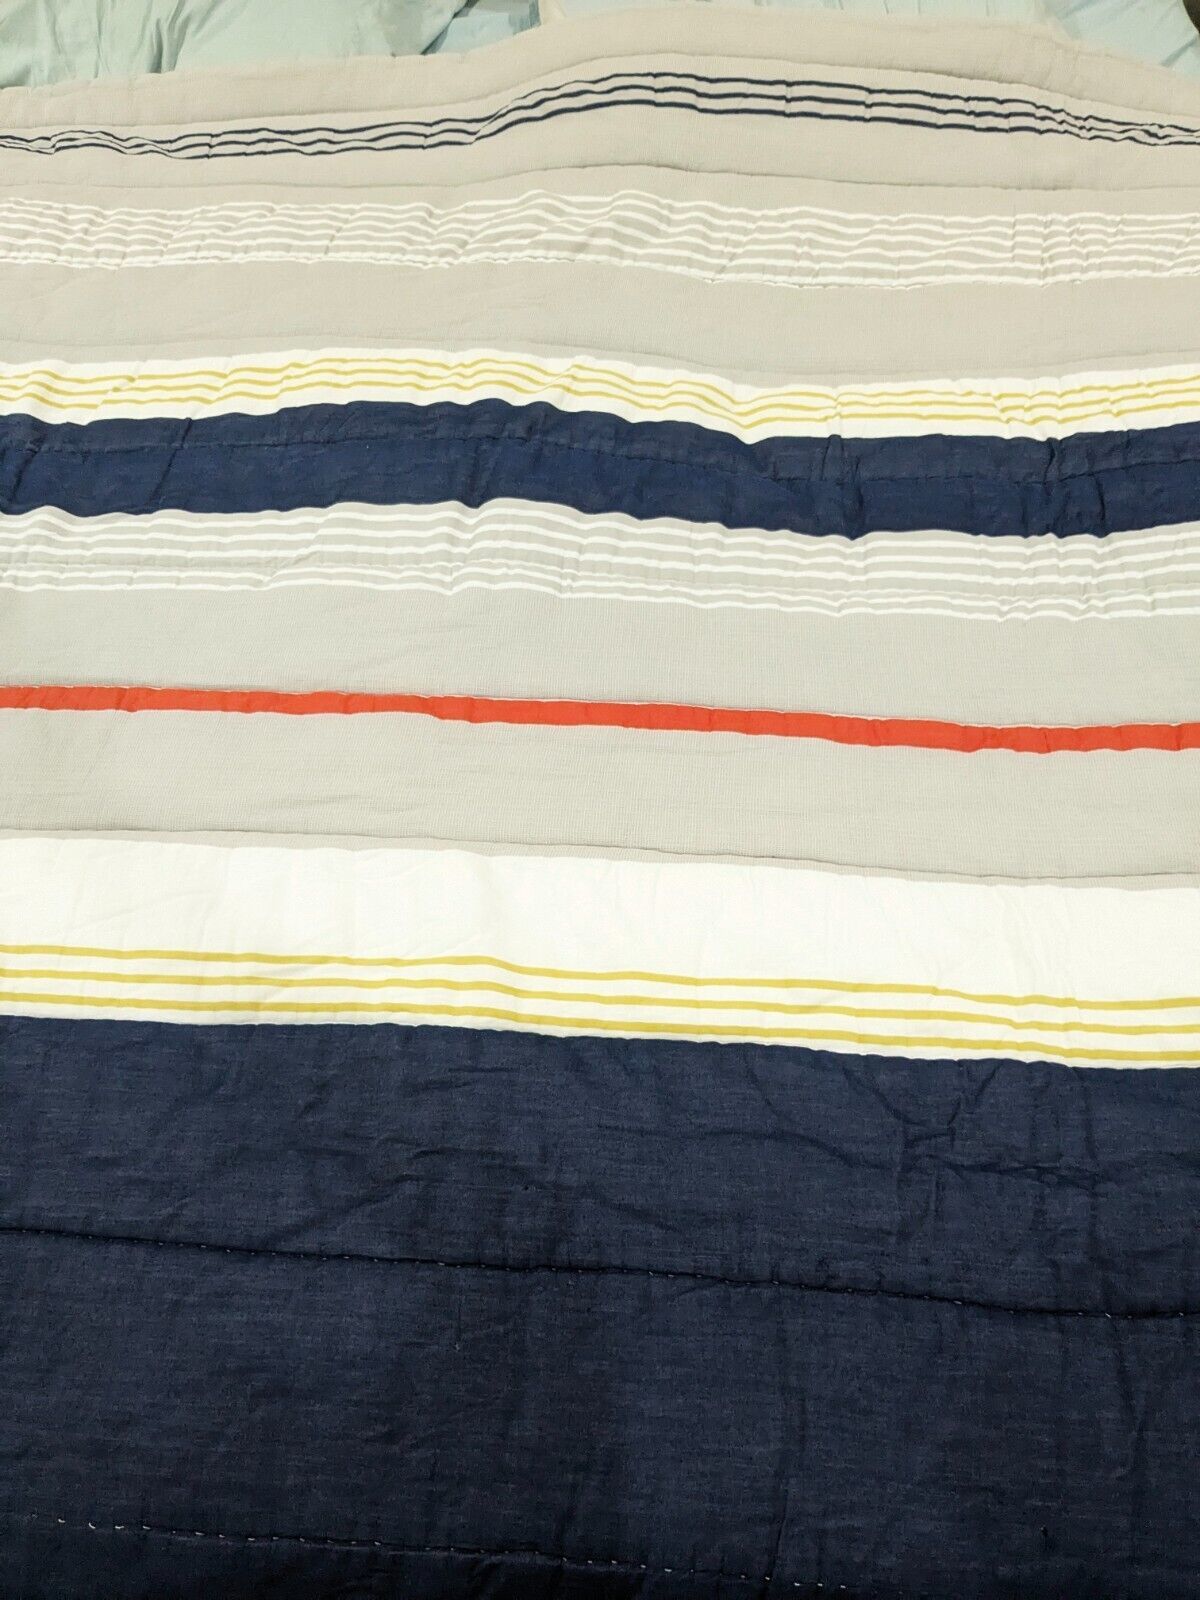 Pottery Barn Teen Wyatt Stripe Comforter Full Queen F/Q  blue orange yellow - $198.00